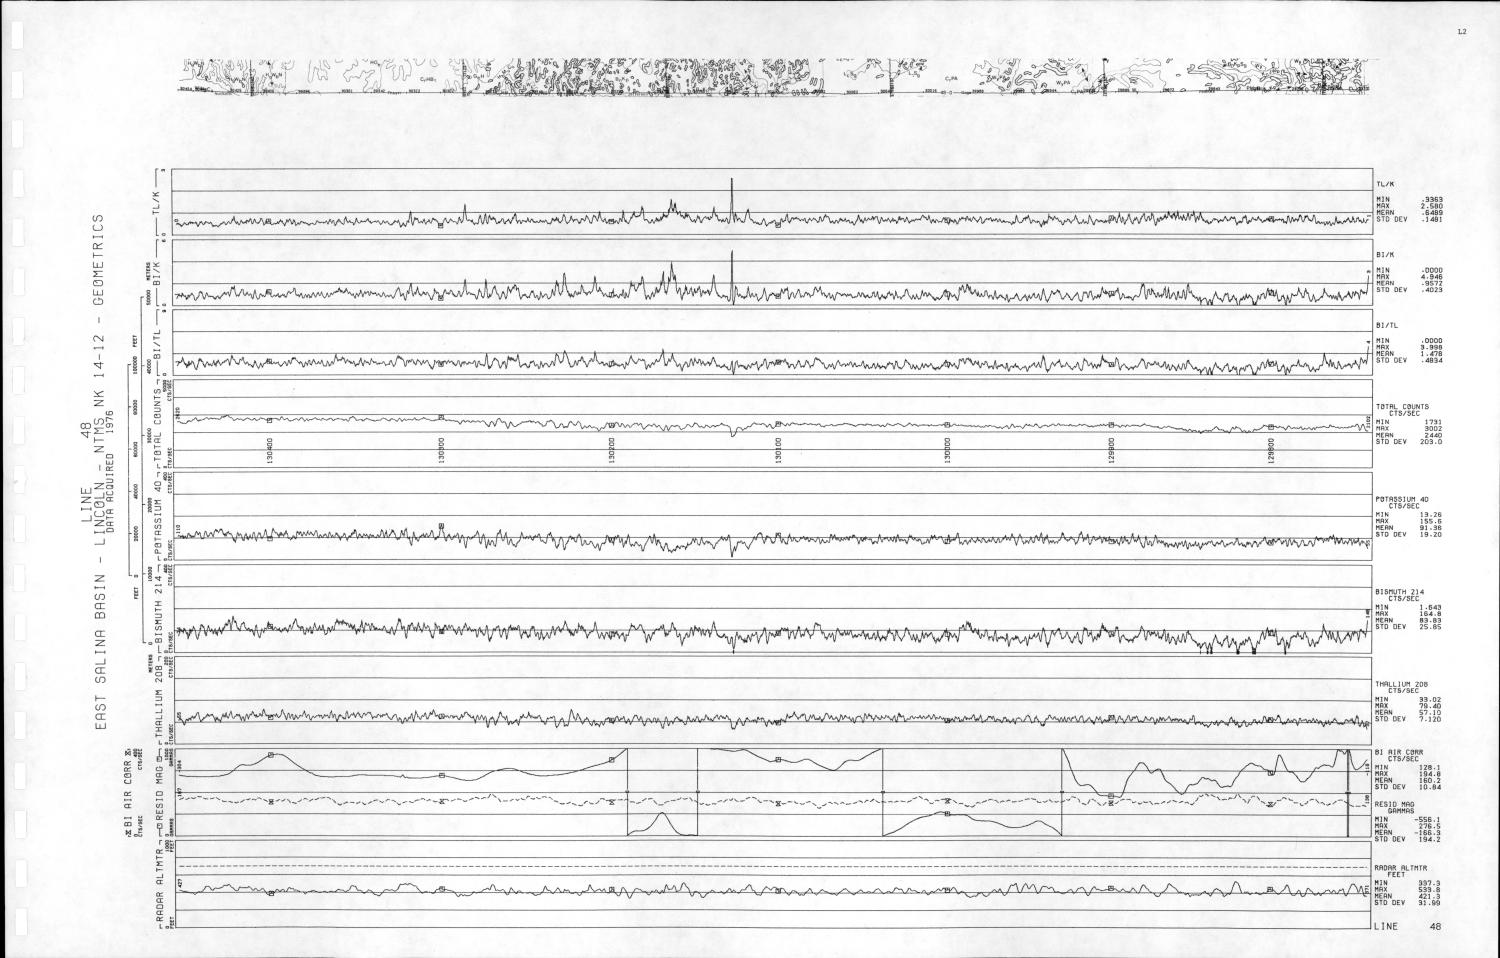 Aerial Gamma Ray and Magnetic Survey, Final Report. Volume 2: Lincoln Quadrangle (Nebraska)
                                                
                                                    2
                                                